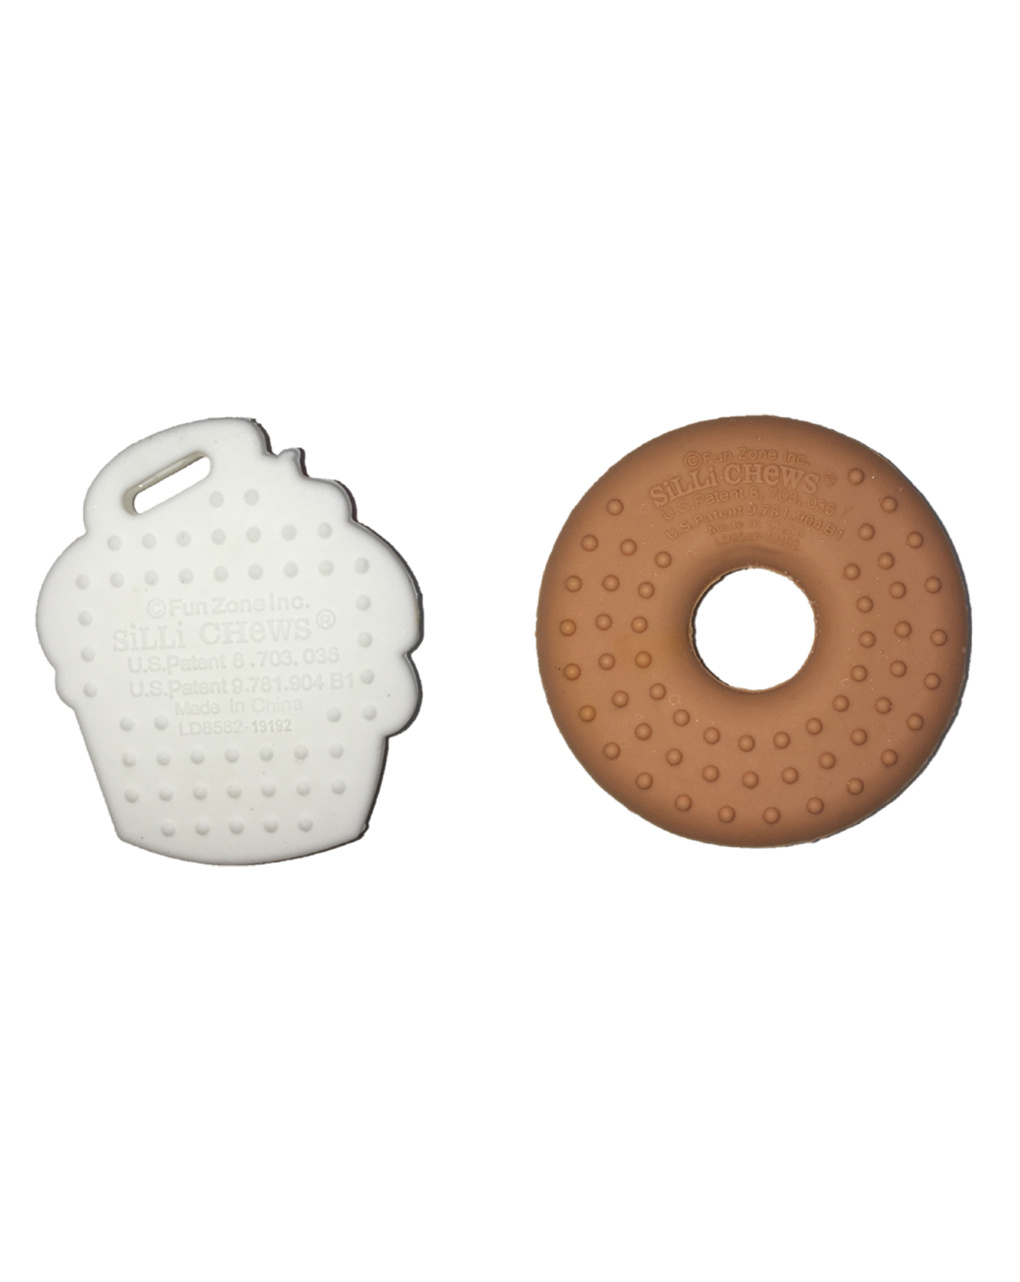 Set de dentición - mini cupcake + mini donut +3m - silly chews - Sille Chews